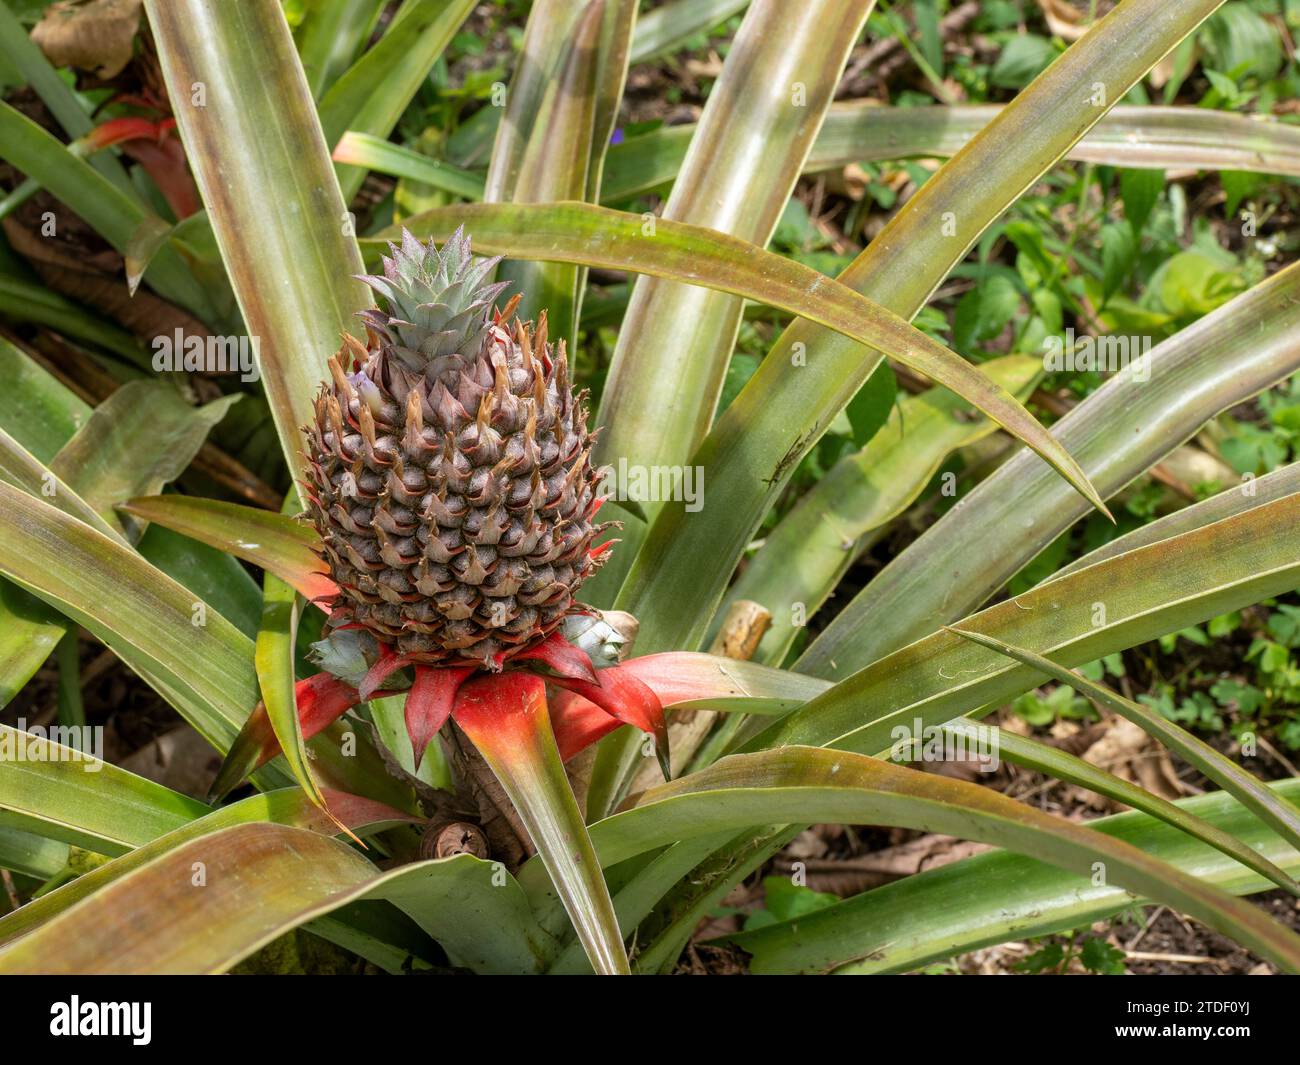 Pineapple (Ananas comosus) growing at the Granja Integral Ochoa hydroponics farm, Santa Cruz Island, Galapagos Islands, UNESCO World Heritage Site Stock Photo